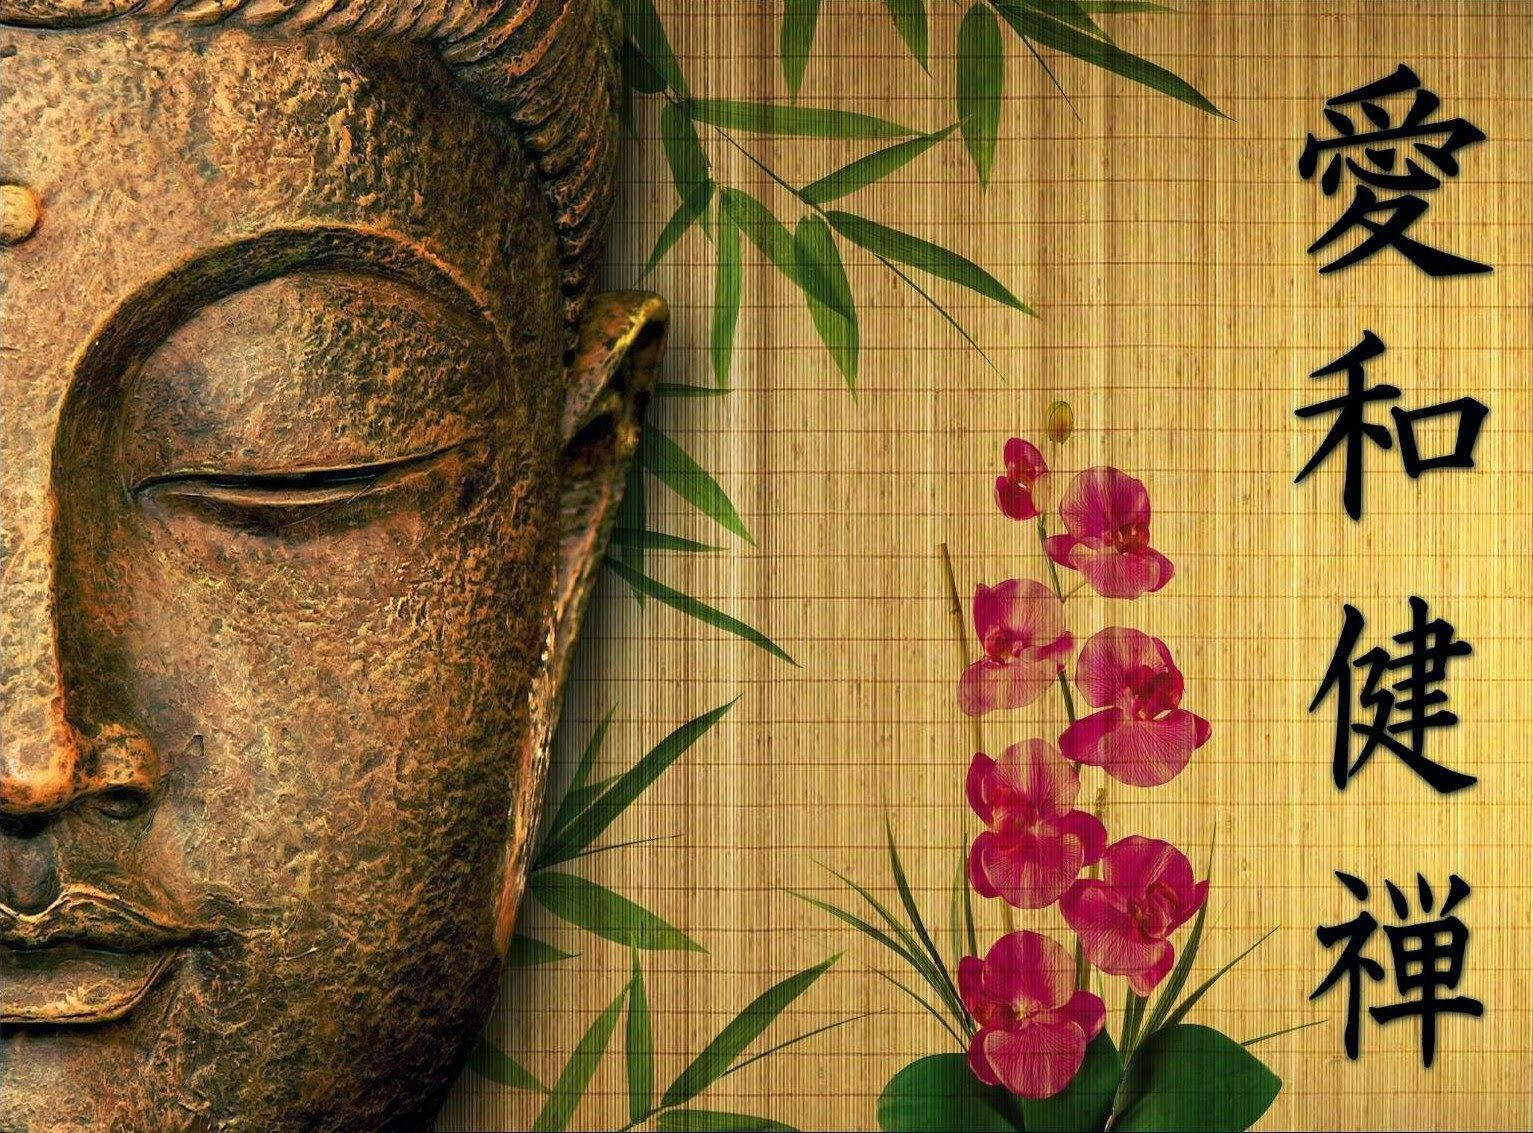 Buddha 1533X1133 Wallpaper and Background Image